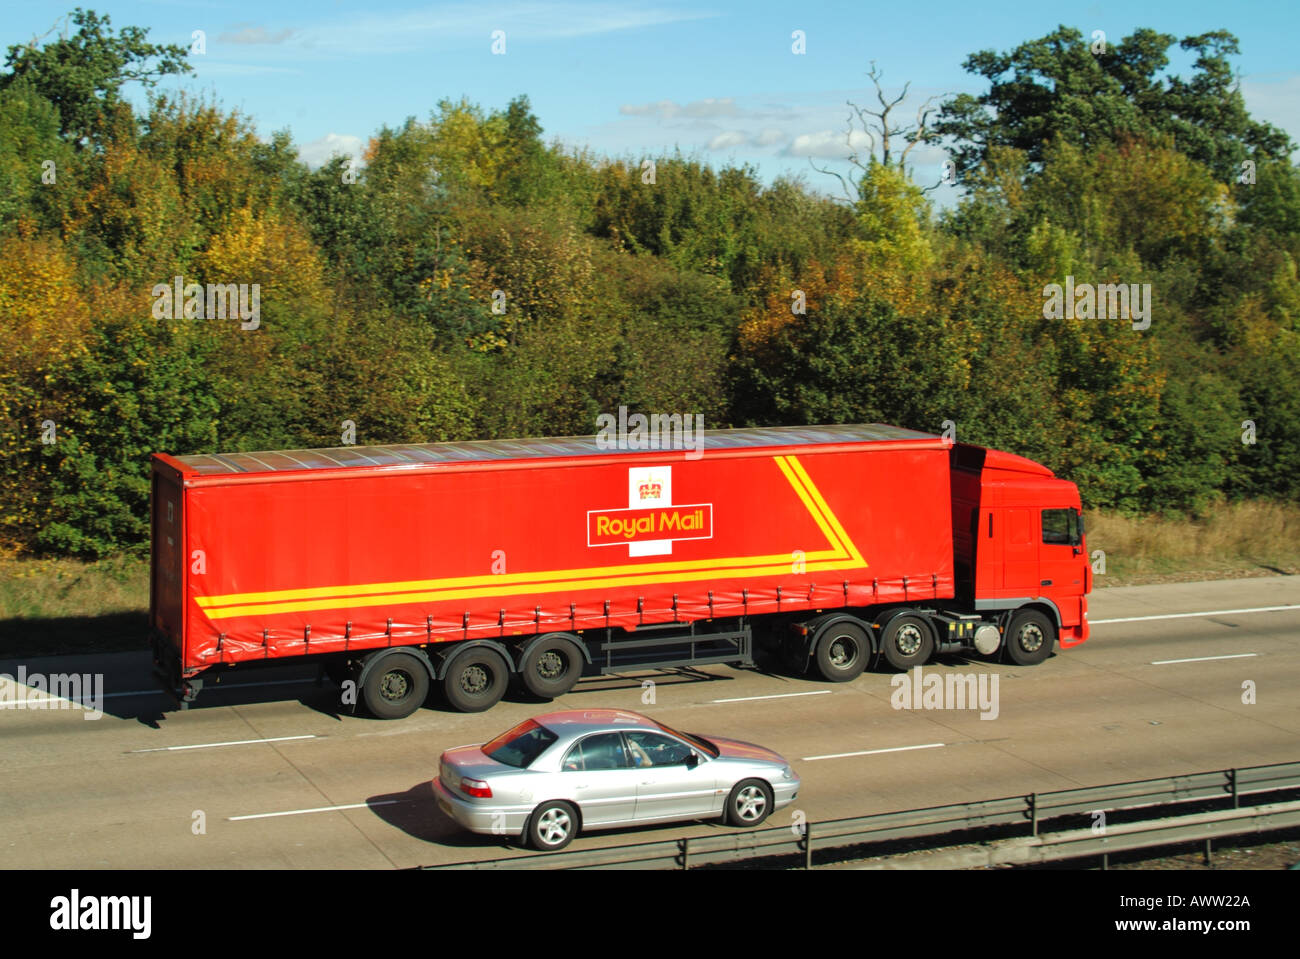 M25 motorway tyre wear saving raised economy axle on Royal Mail hgv lorry truck Stock Photo